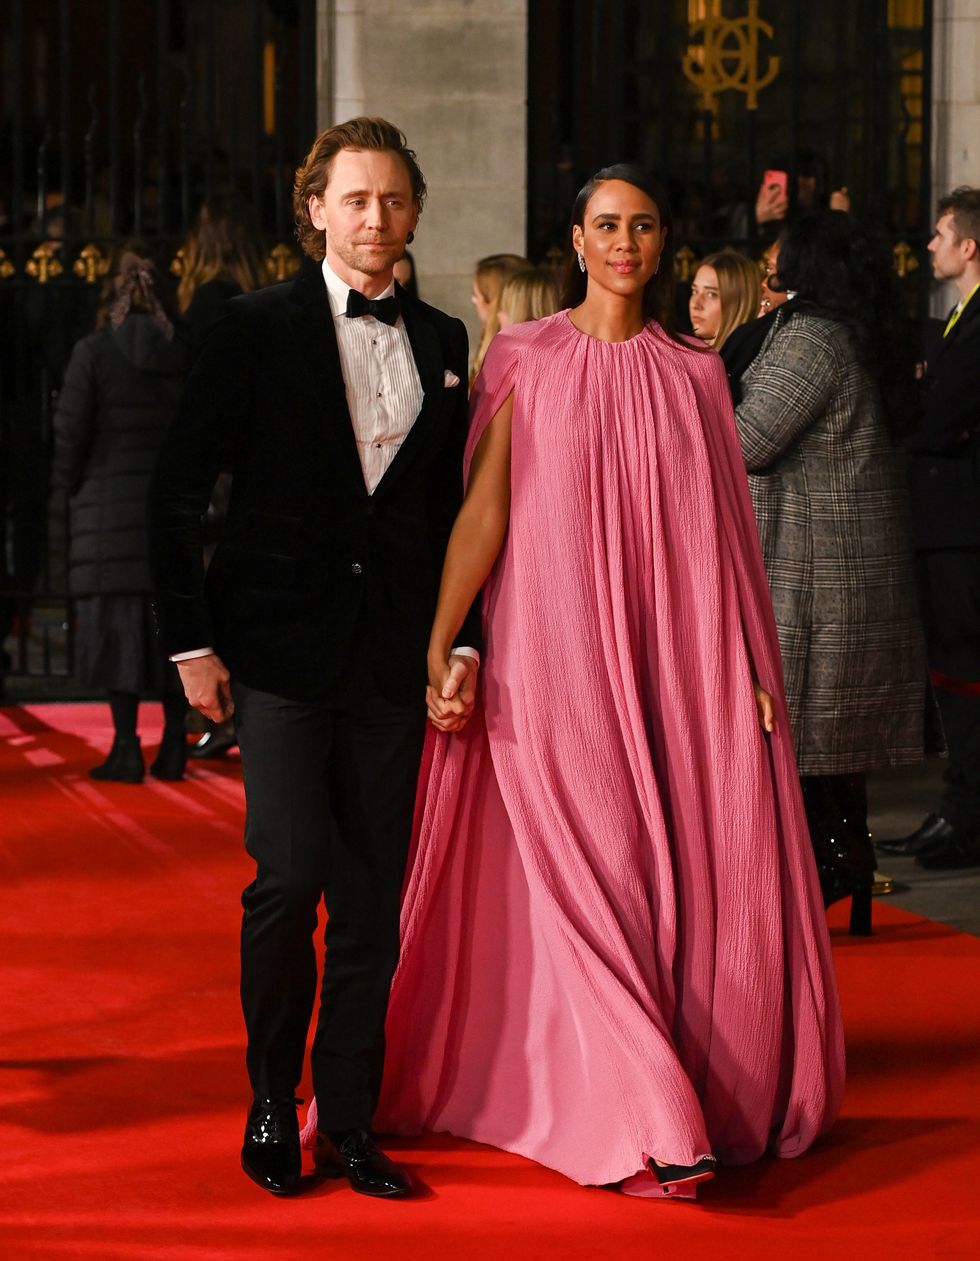 ee british academy film awards 2022 dinner red carpet arrivals